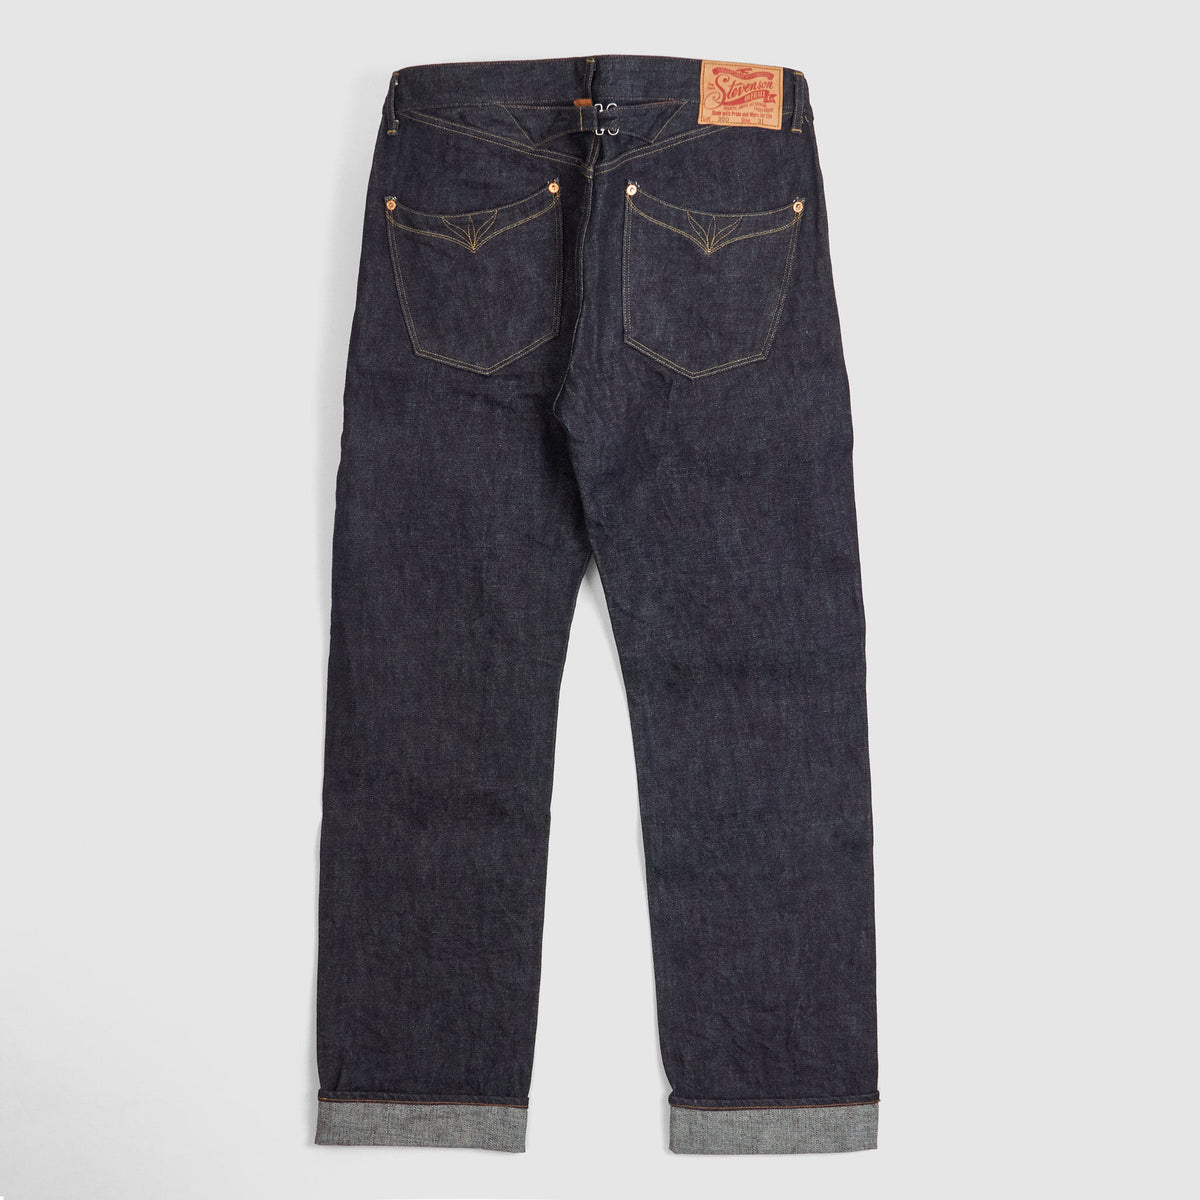 Stevenson Overall  CO. Cinch Back Western Denim Jeans